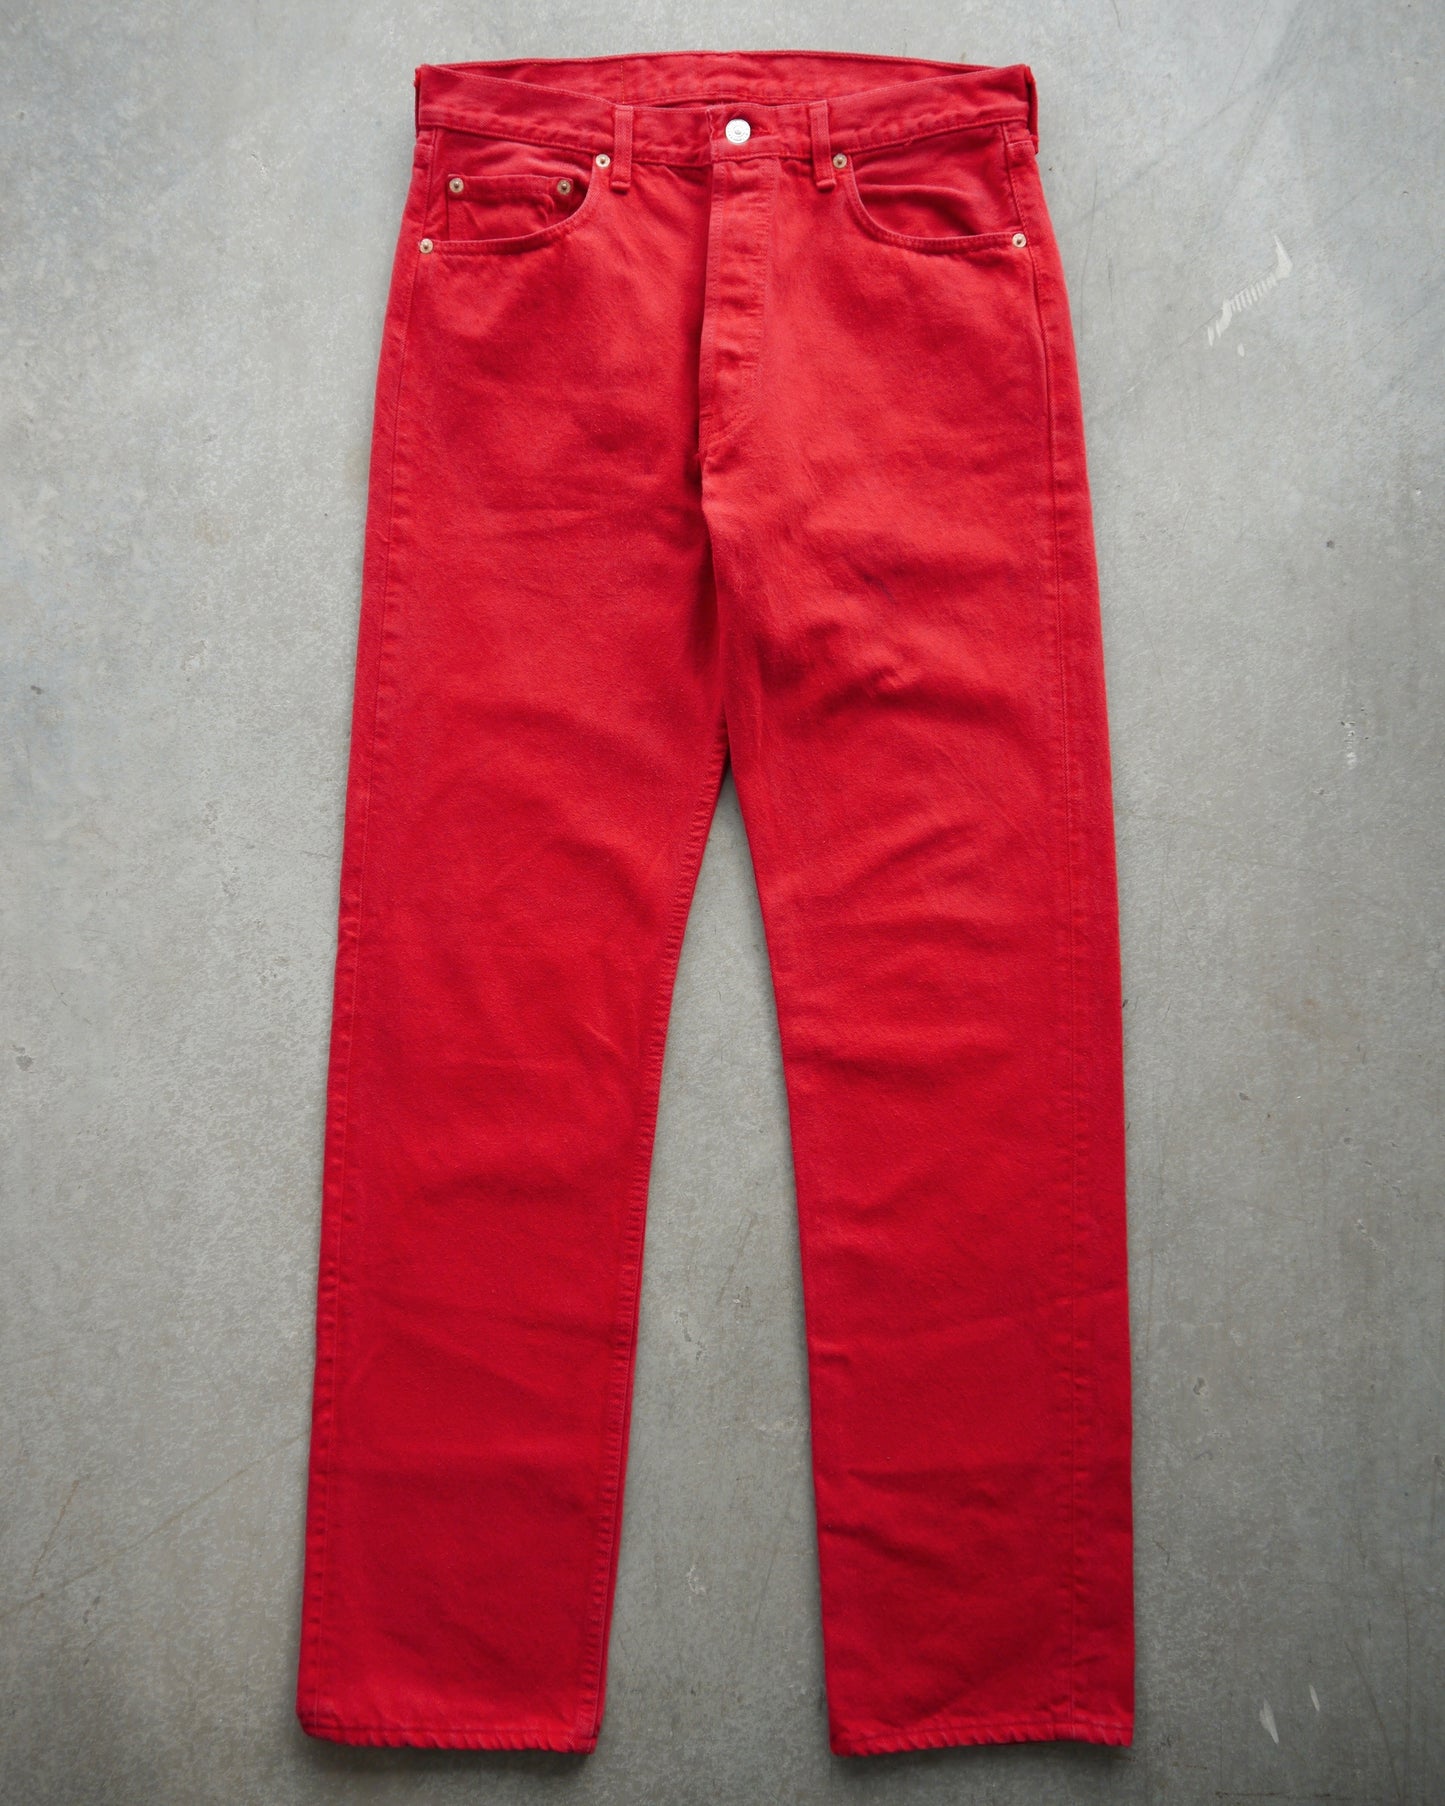 90s Levi’s 501 Red Denim Jeans (33x34)